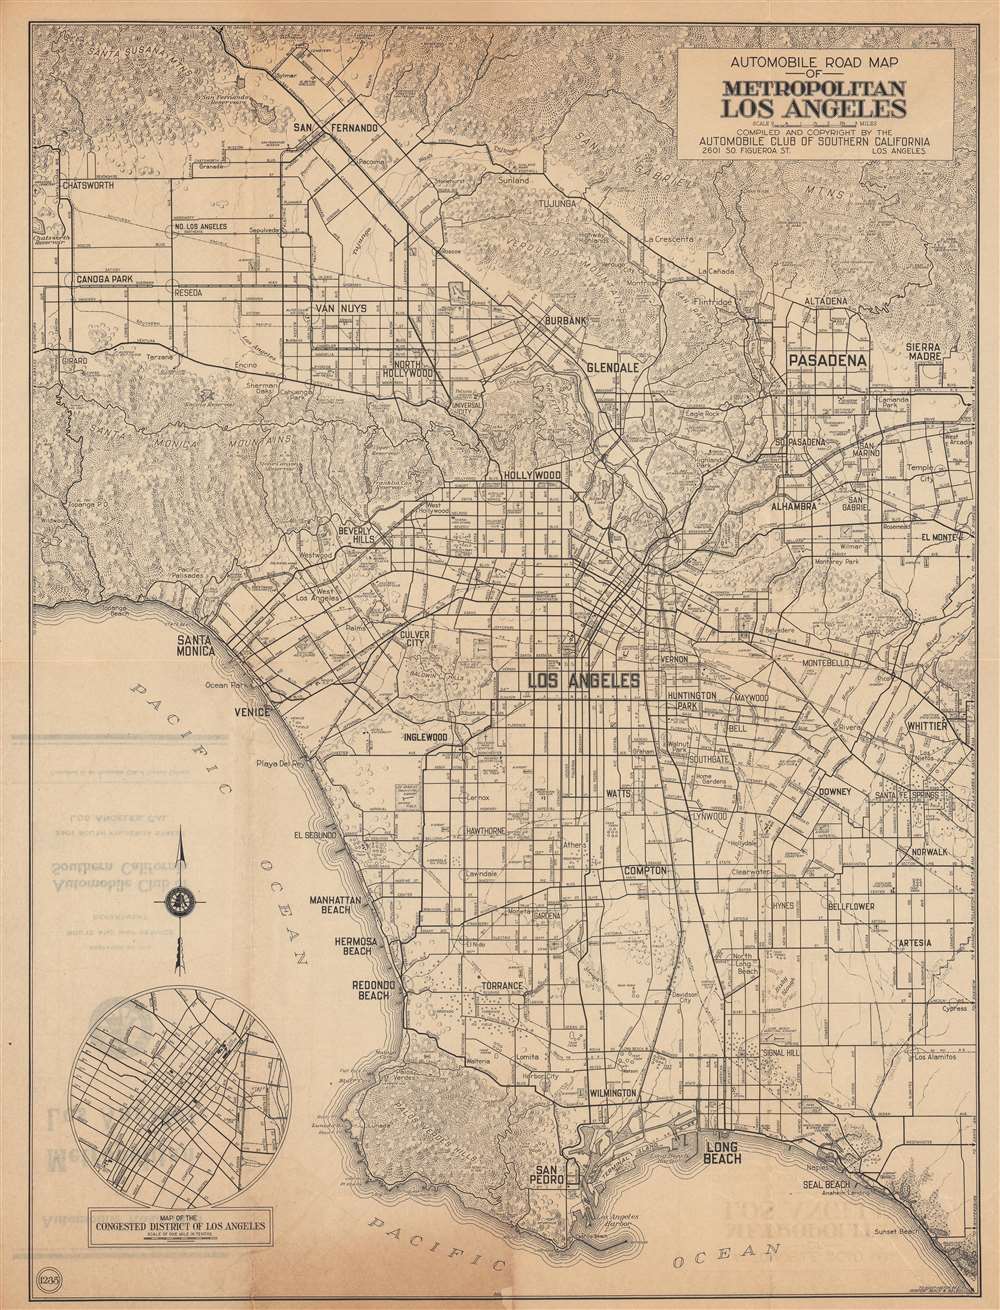 Automobile road map of metropolitan Los Angeles. - Main View